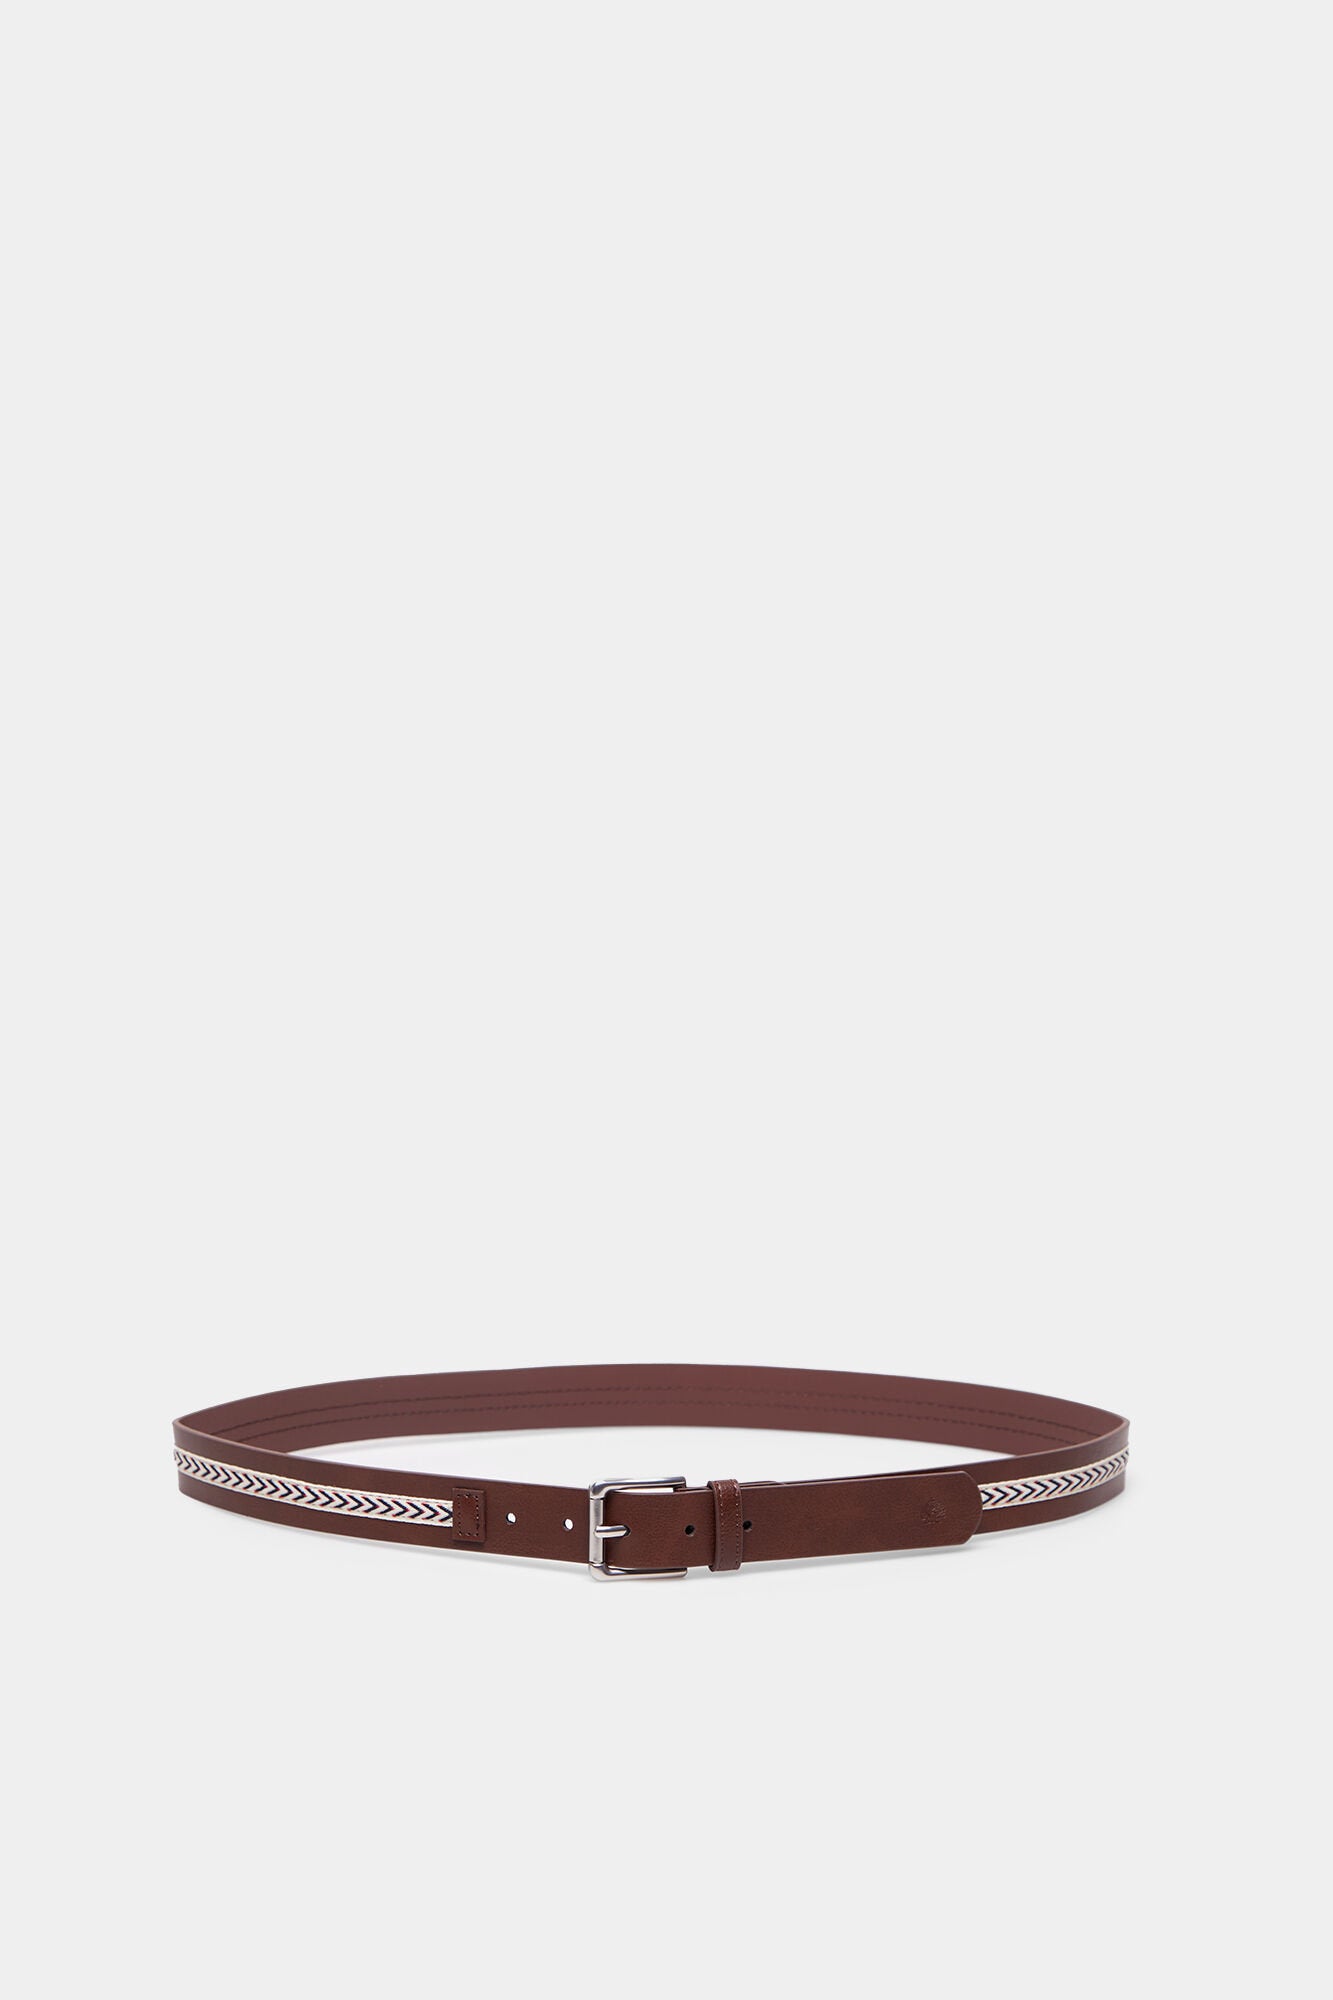 Thin Brown Belt With Design_2867125_33_04